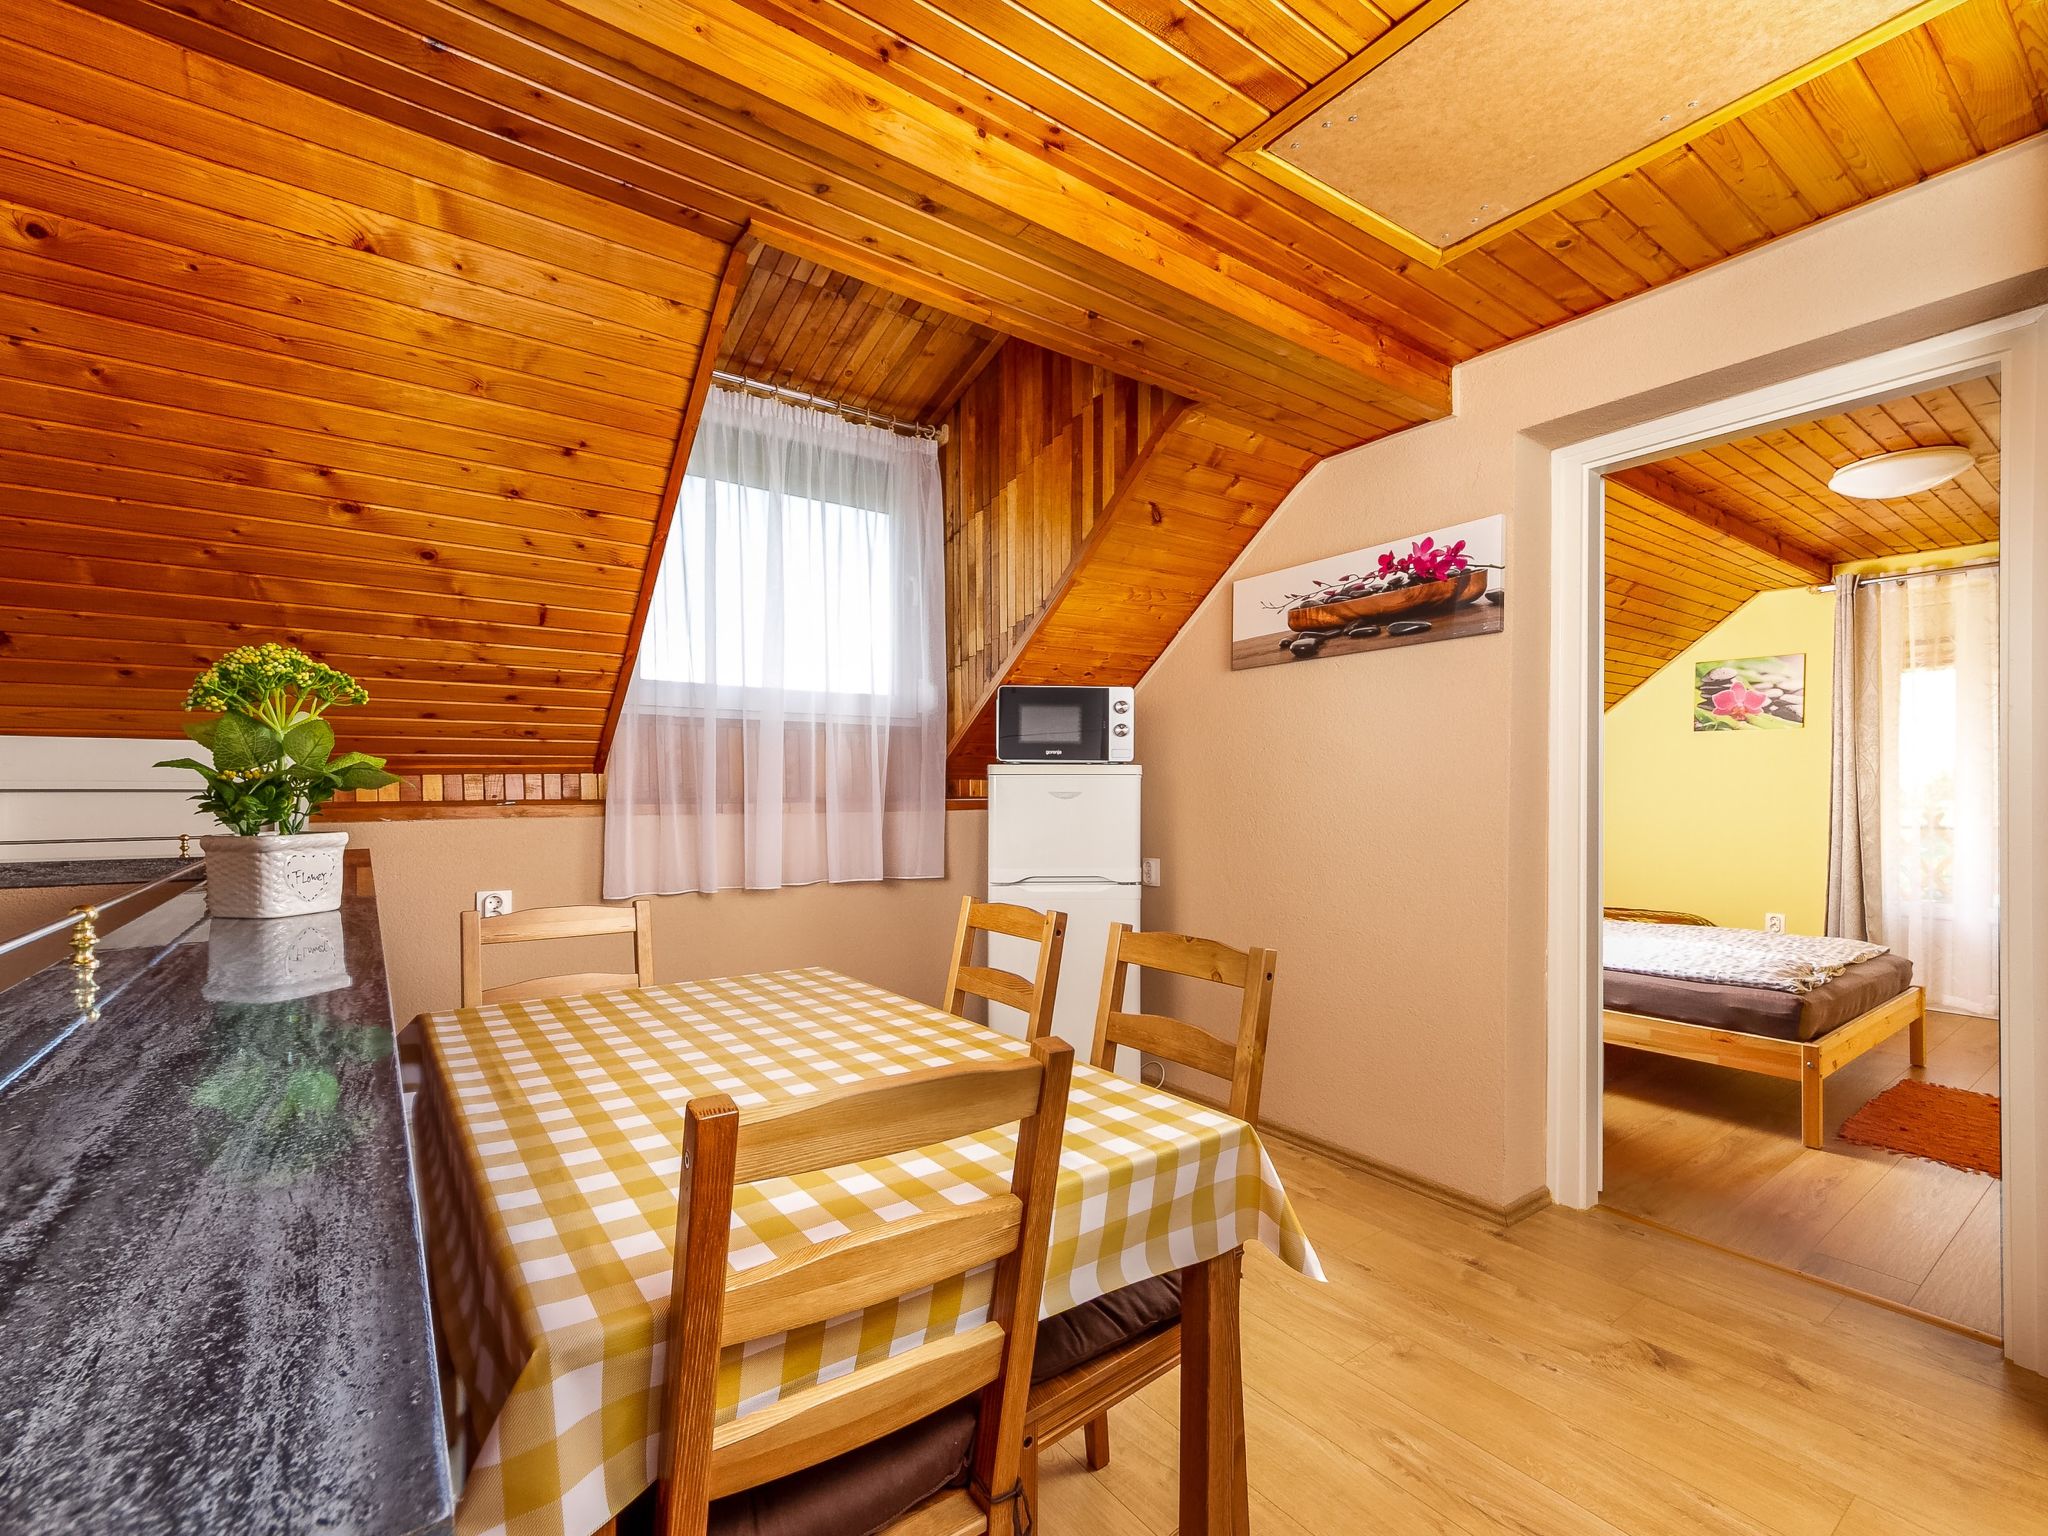 Foto 4 - Casa con 4 camere da letto a Balatonkeresztúr con piscina privata e giardino